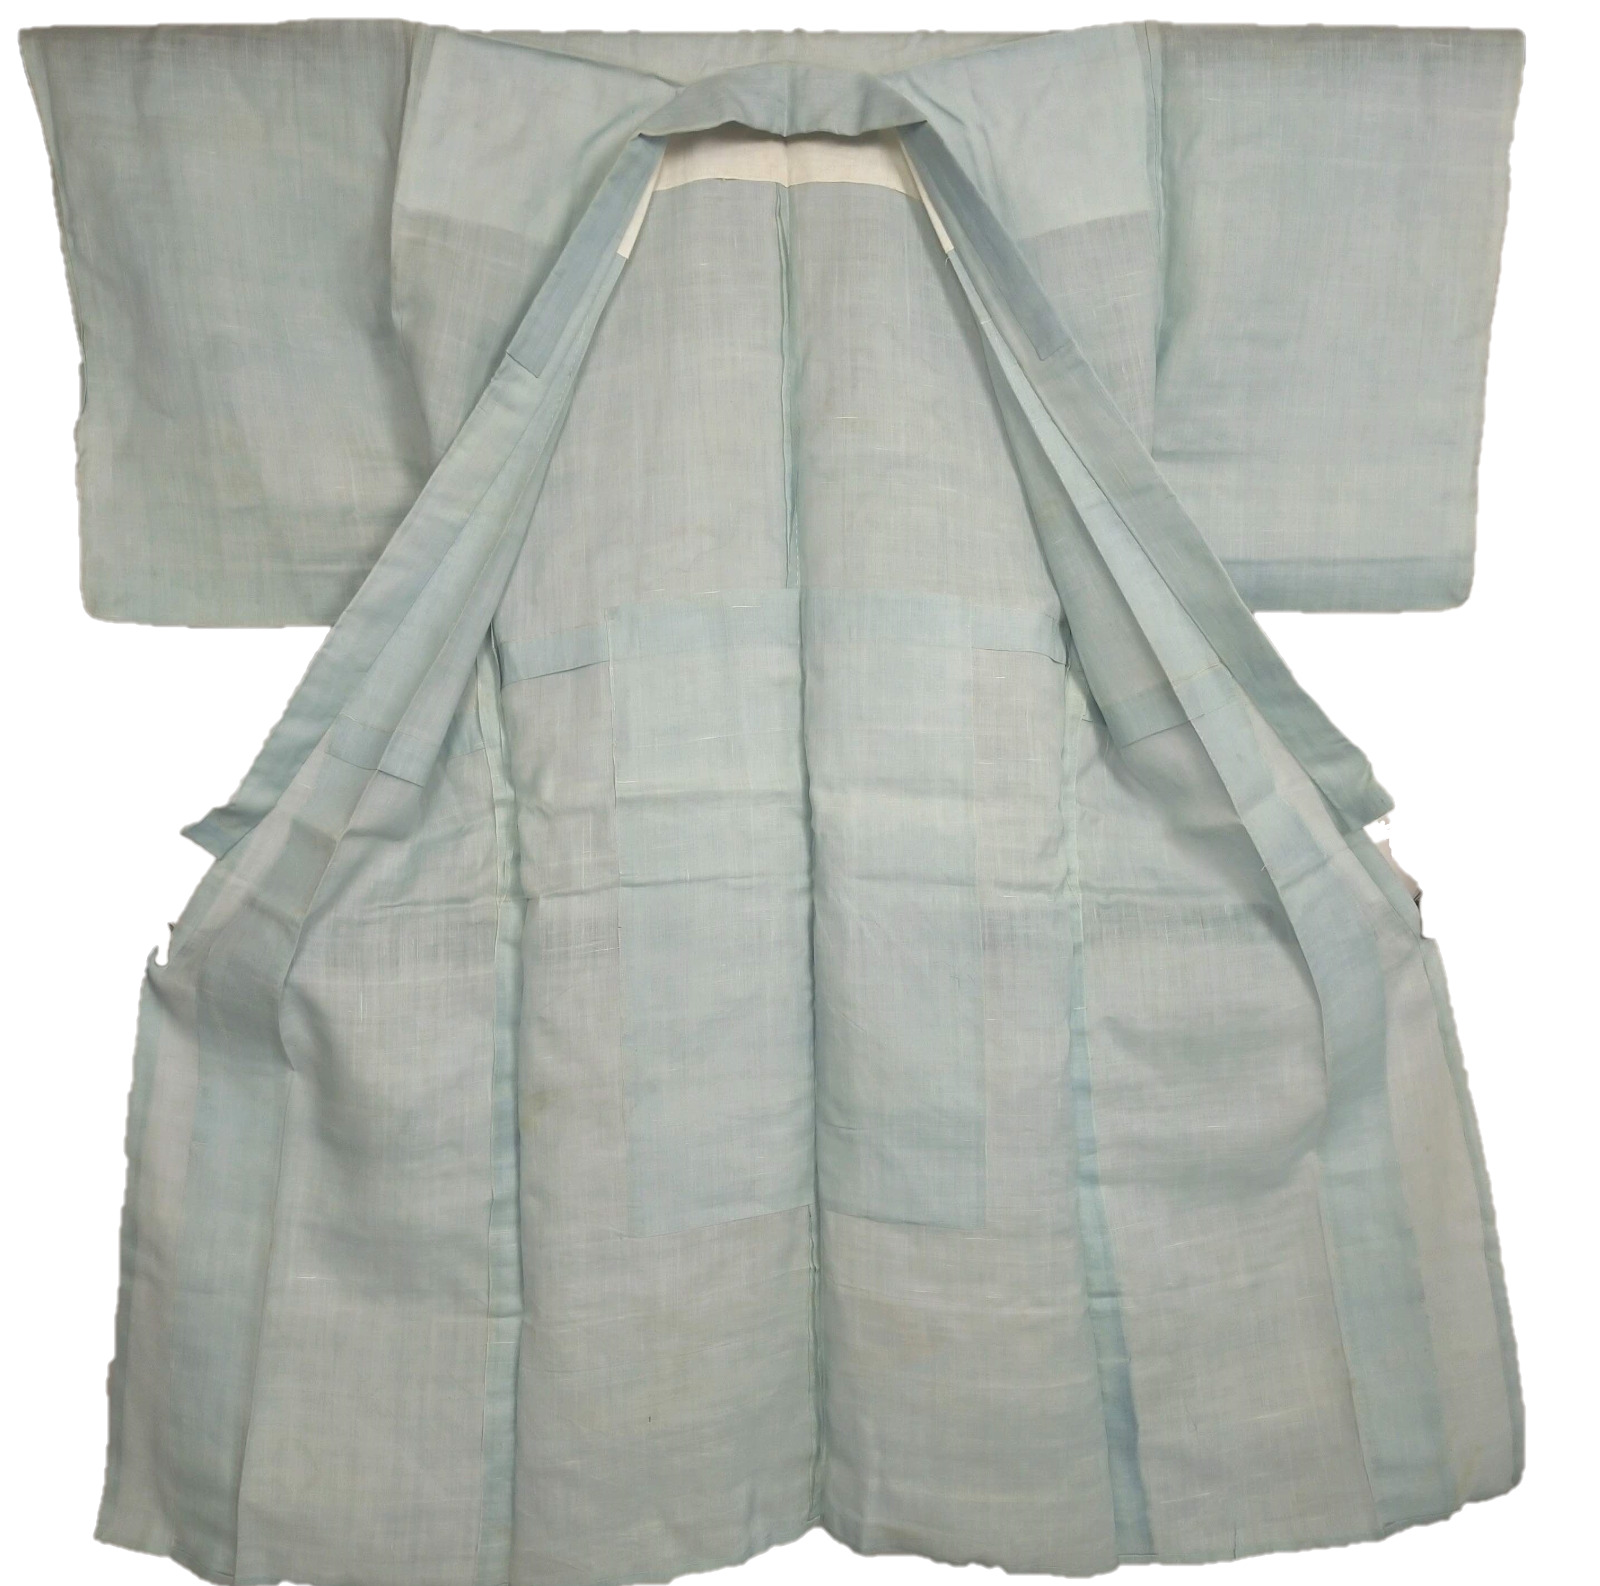 Antique Japanese Kimono BORO Samurai formal attire Indigo-dyed linen fabric 9462